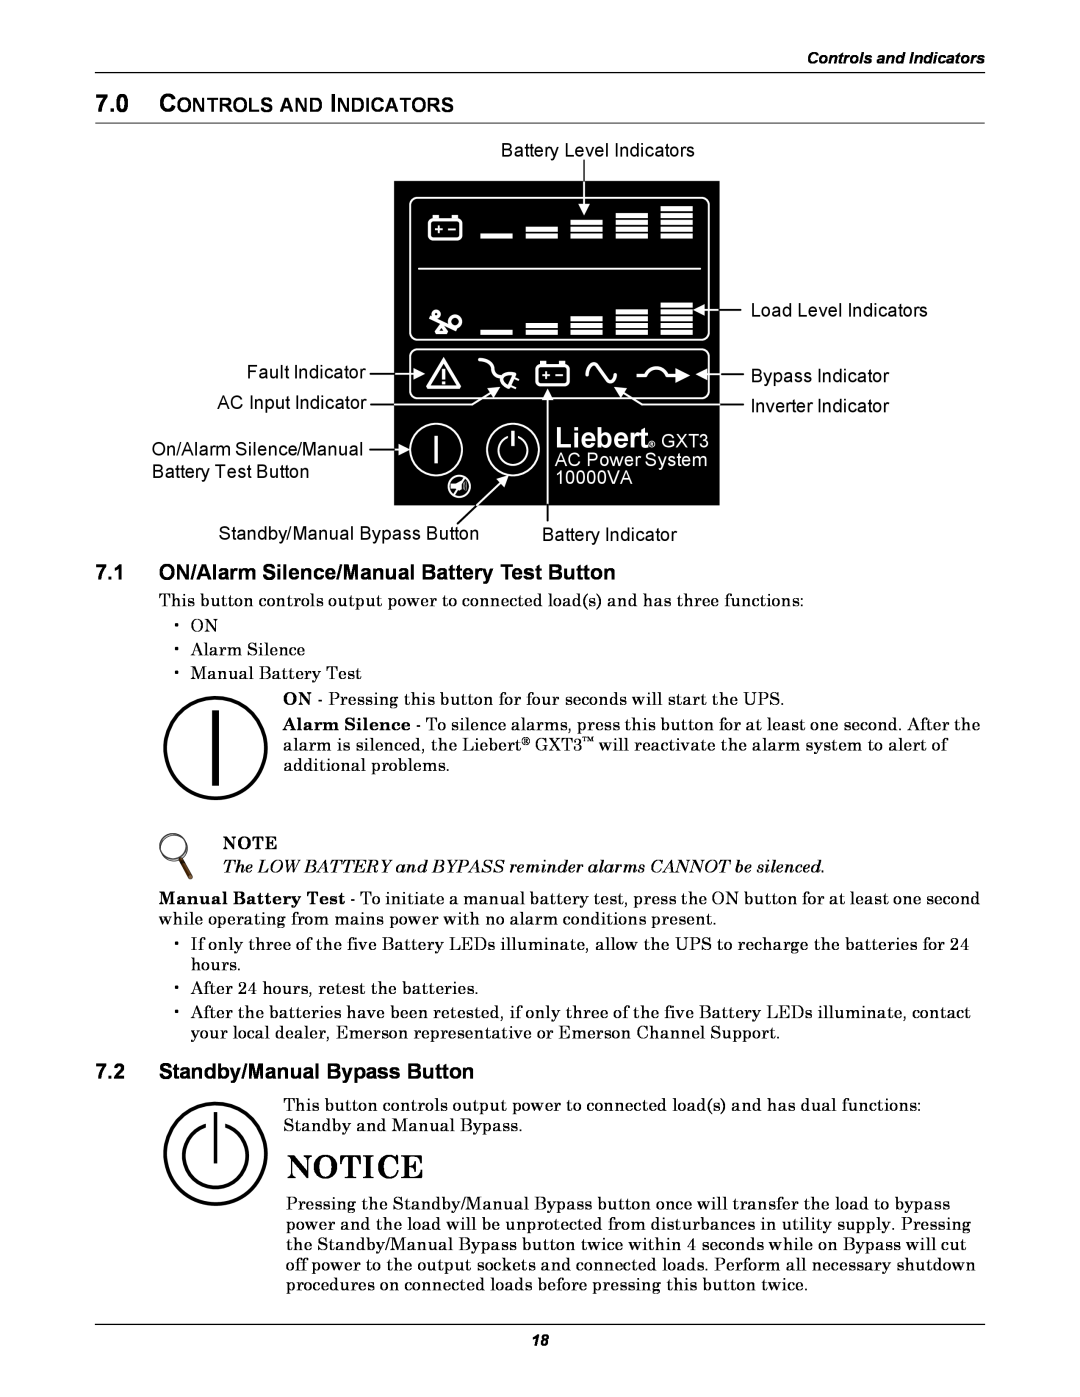 Emerson GXT3 230V user manual Notice, Liebert GXT3, 7.0CONTROLS AND INDICATORS, AC Power System, 10000VA 